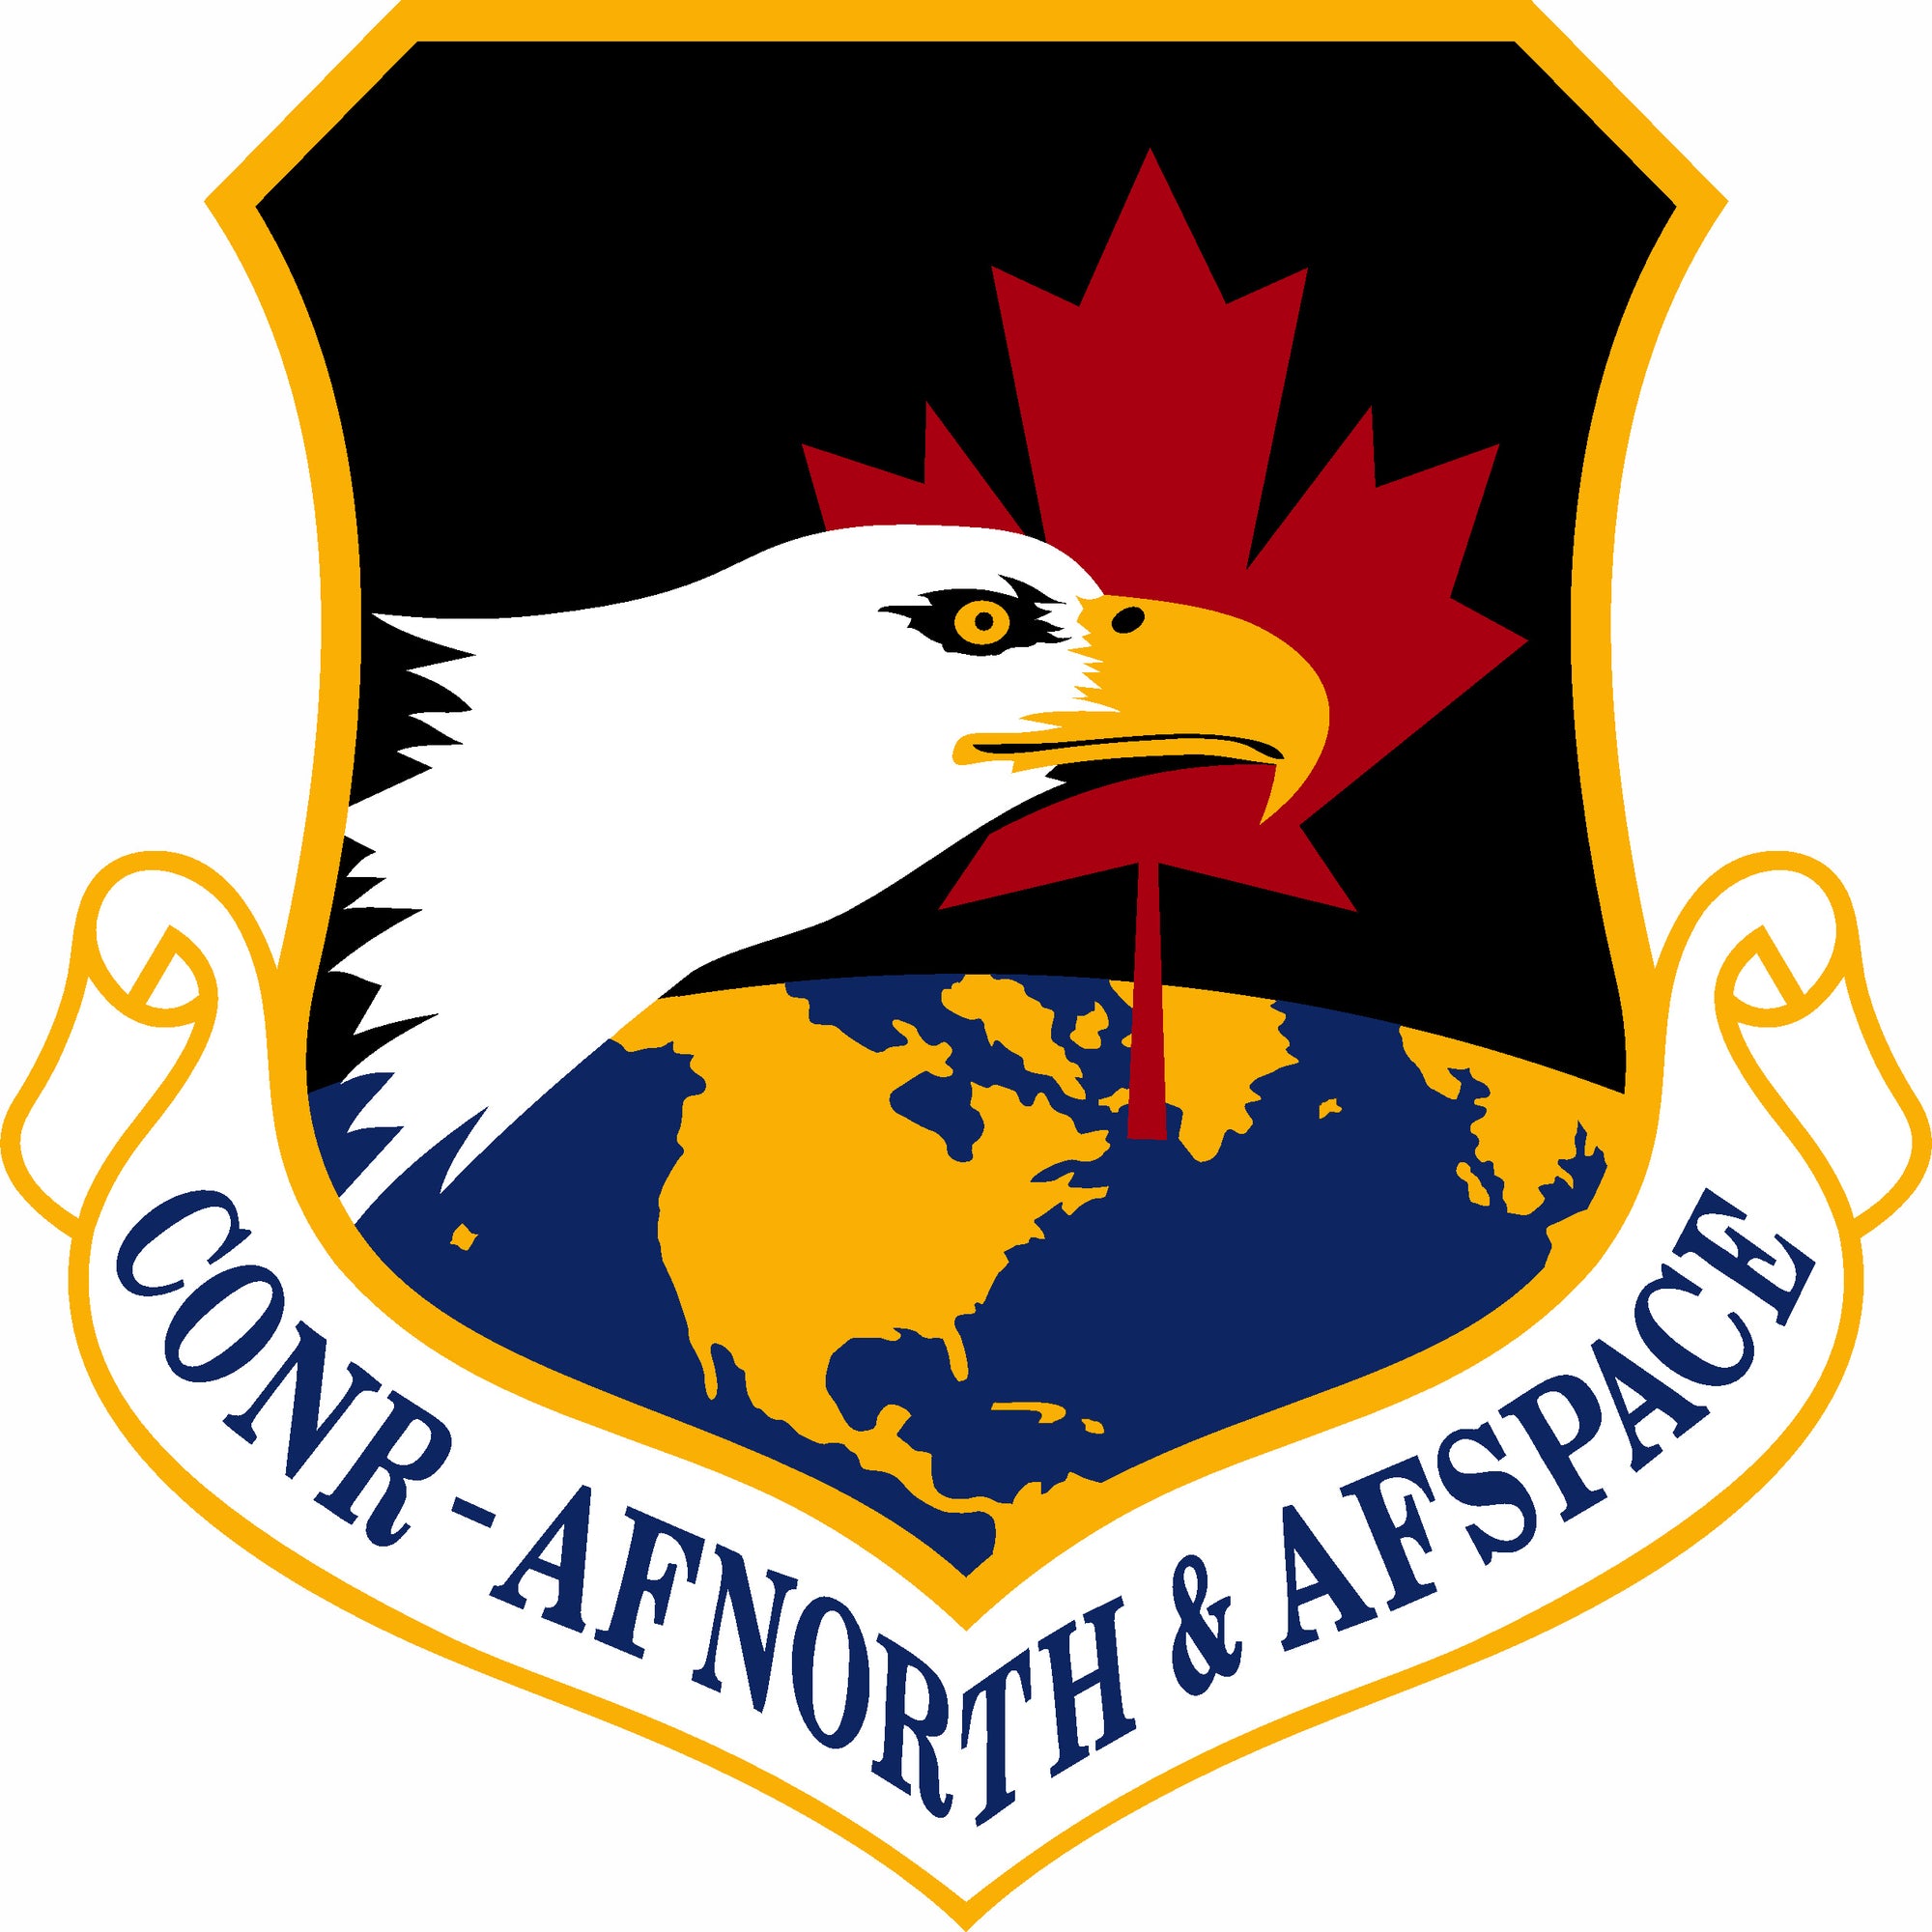 1st Air Force/AFNORTH & AFSPACE §